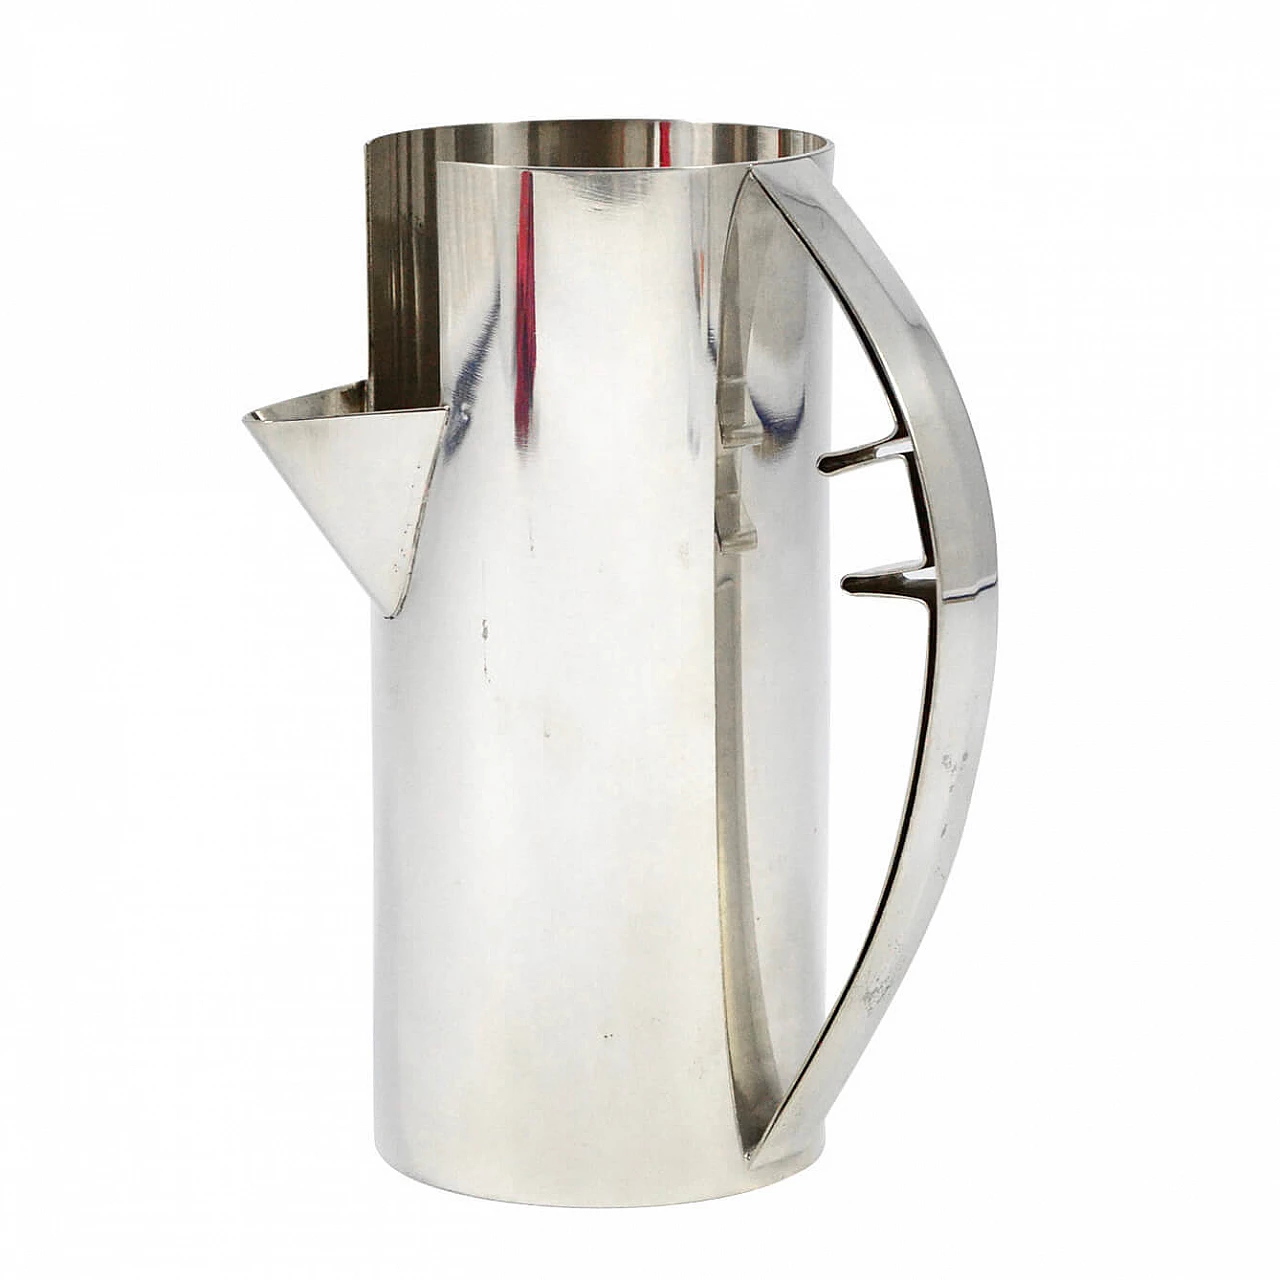 Silverplate jug by Carlo Scarpa for Cleto Munari, 1977 1191889